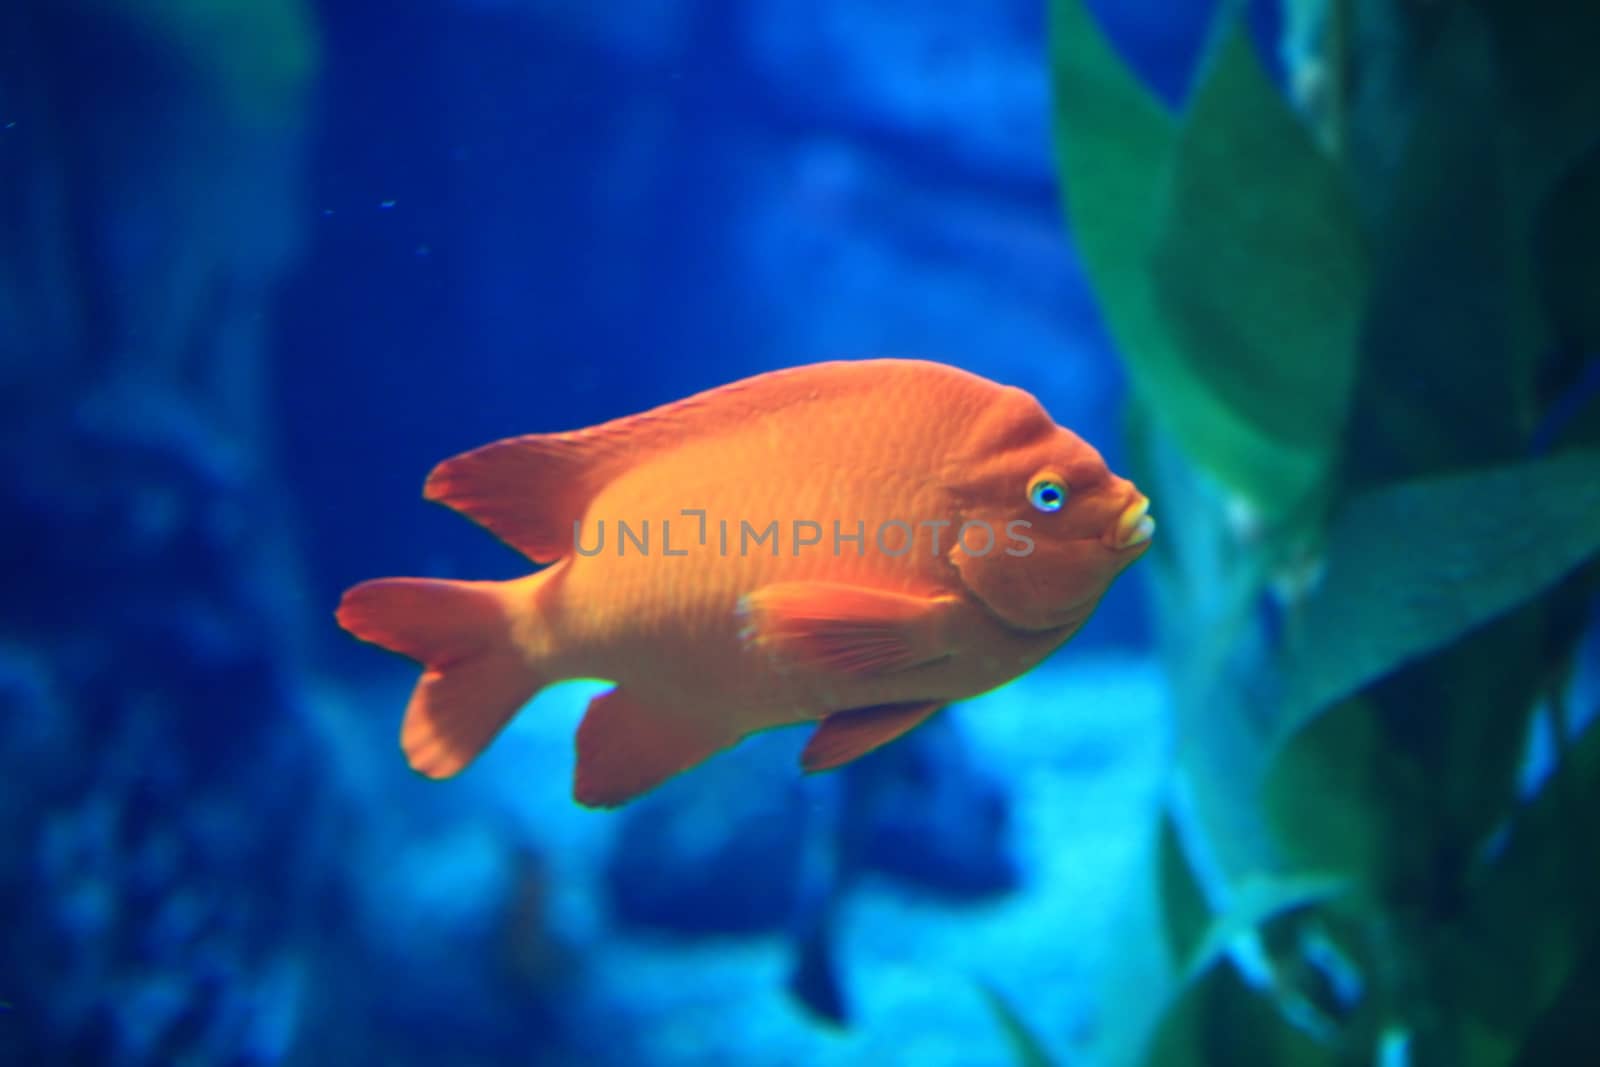 Orange Fish in Blue Water by tobkatrina